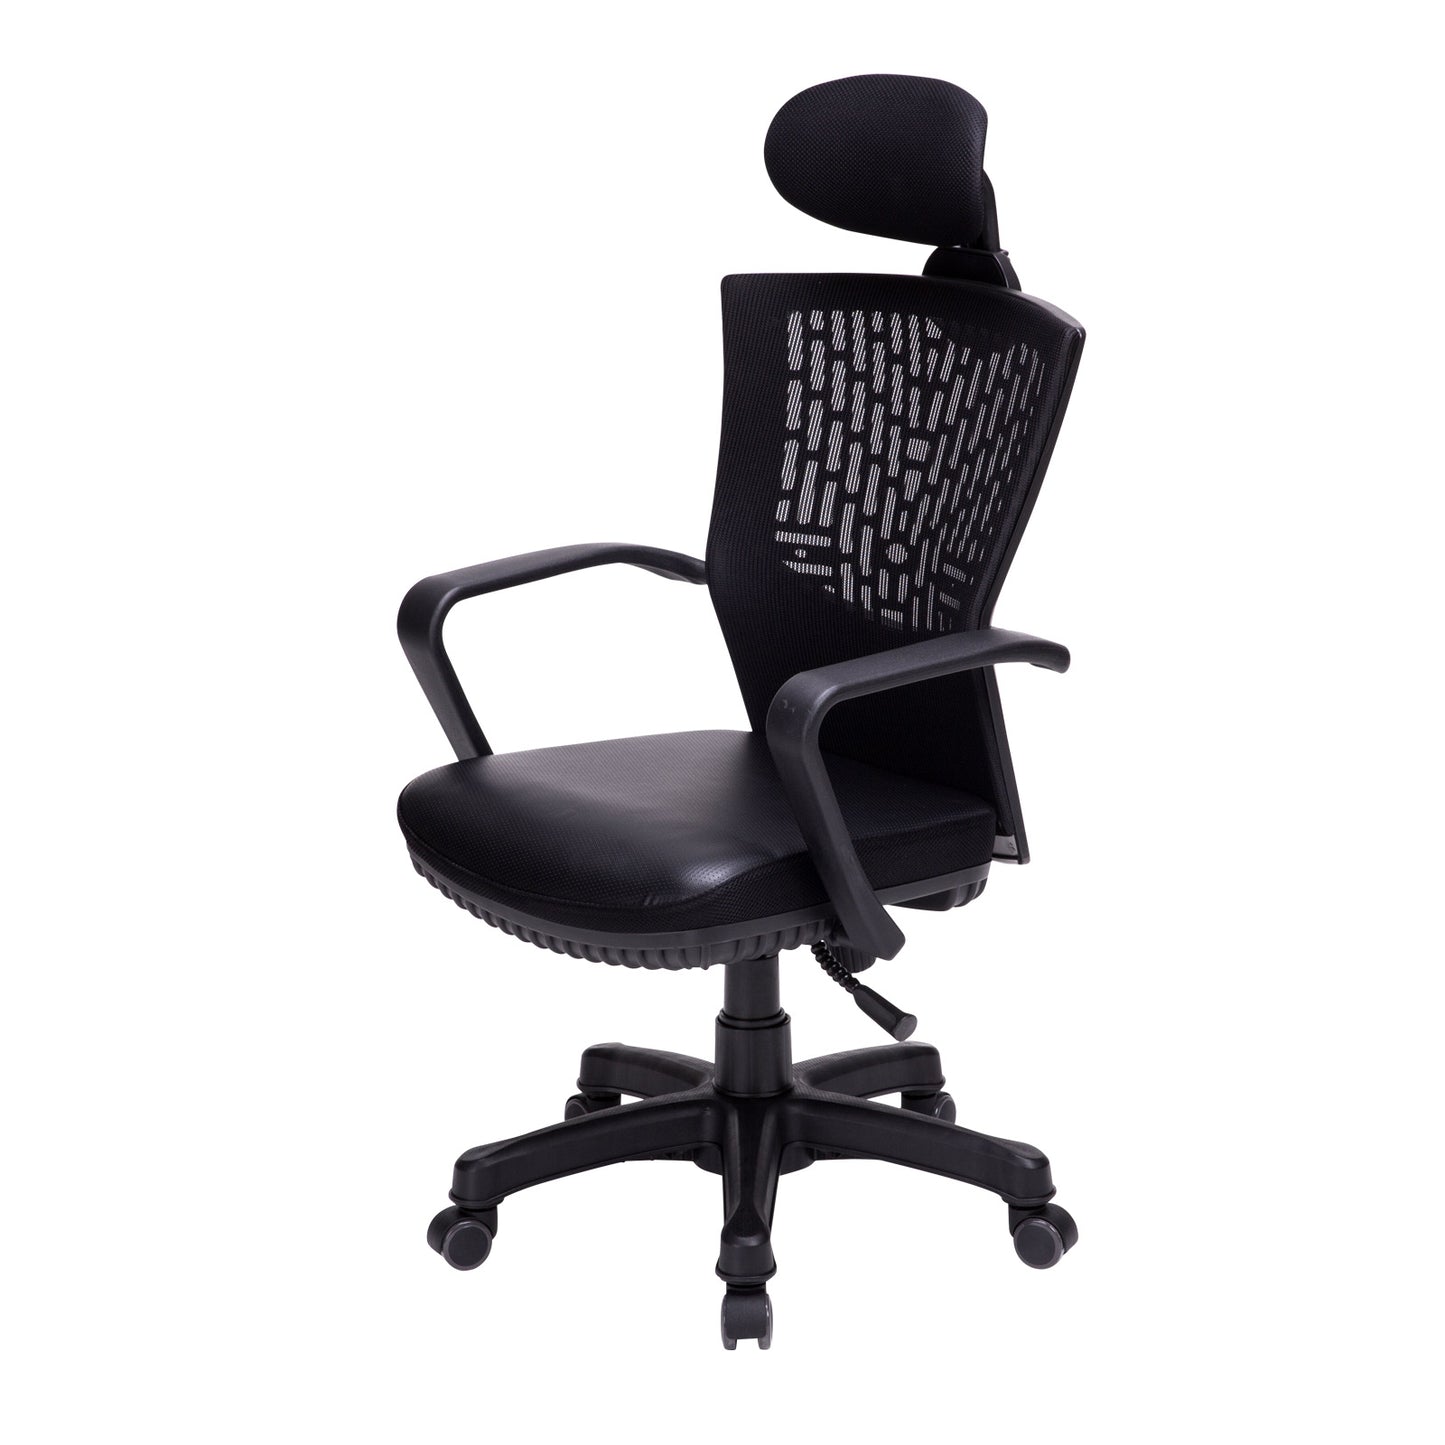 Korean Office Chair Ergonomic Chill Computer Gaming - Black